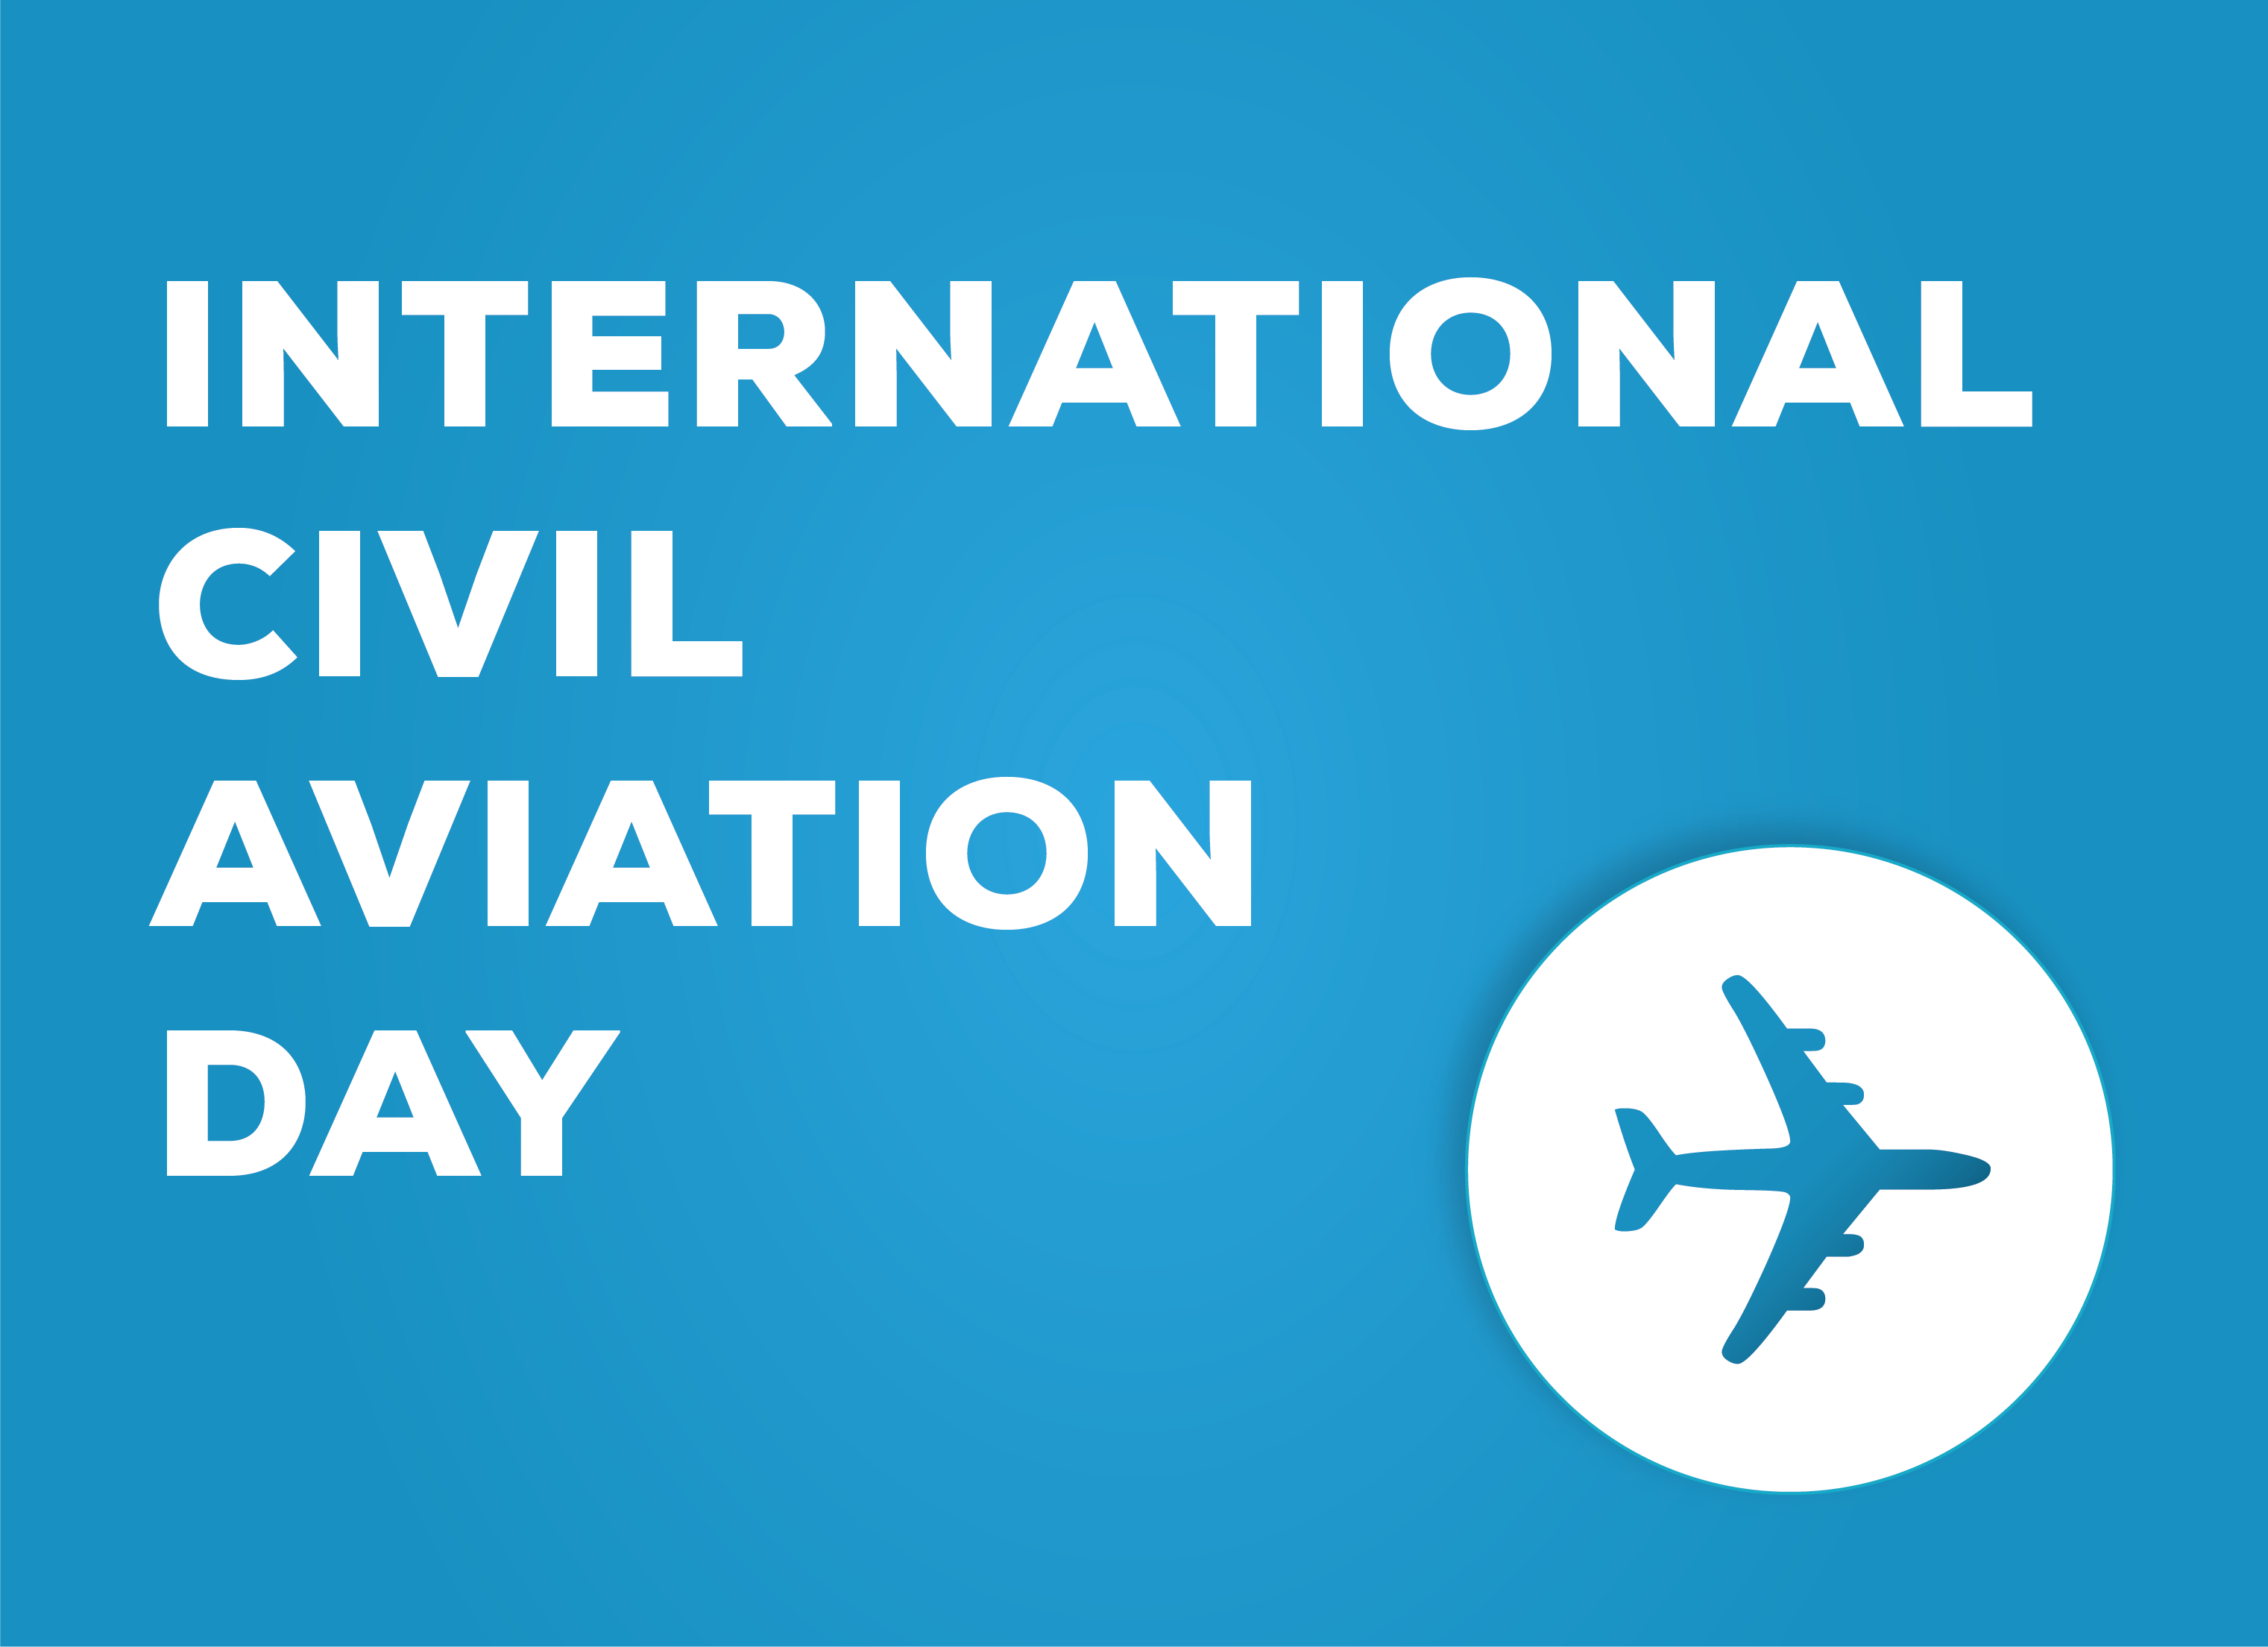 Civil Aviation Day 2021